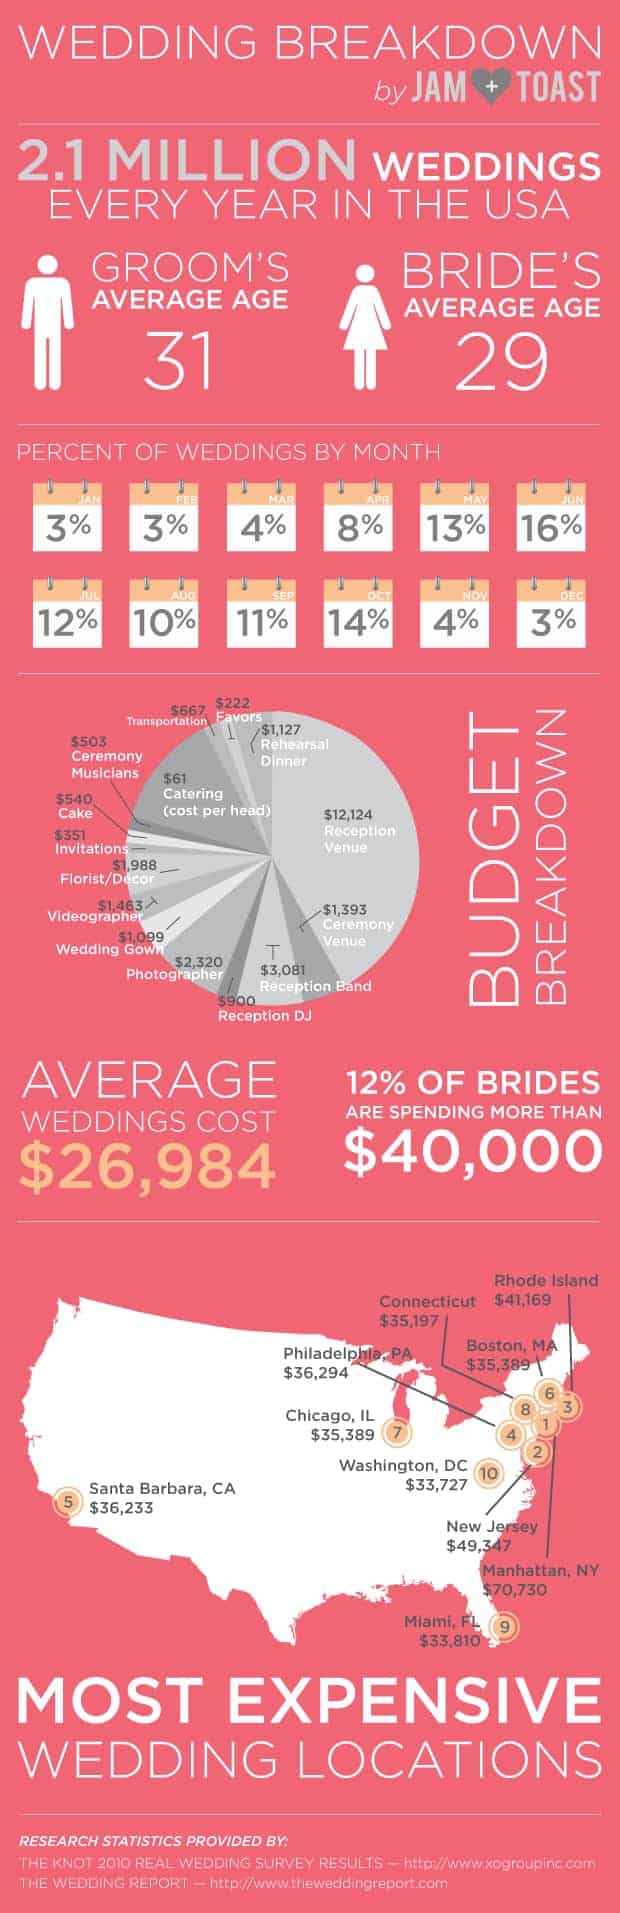 Wedding Breakdown Infographic